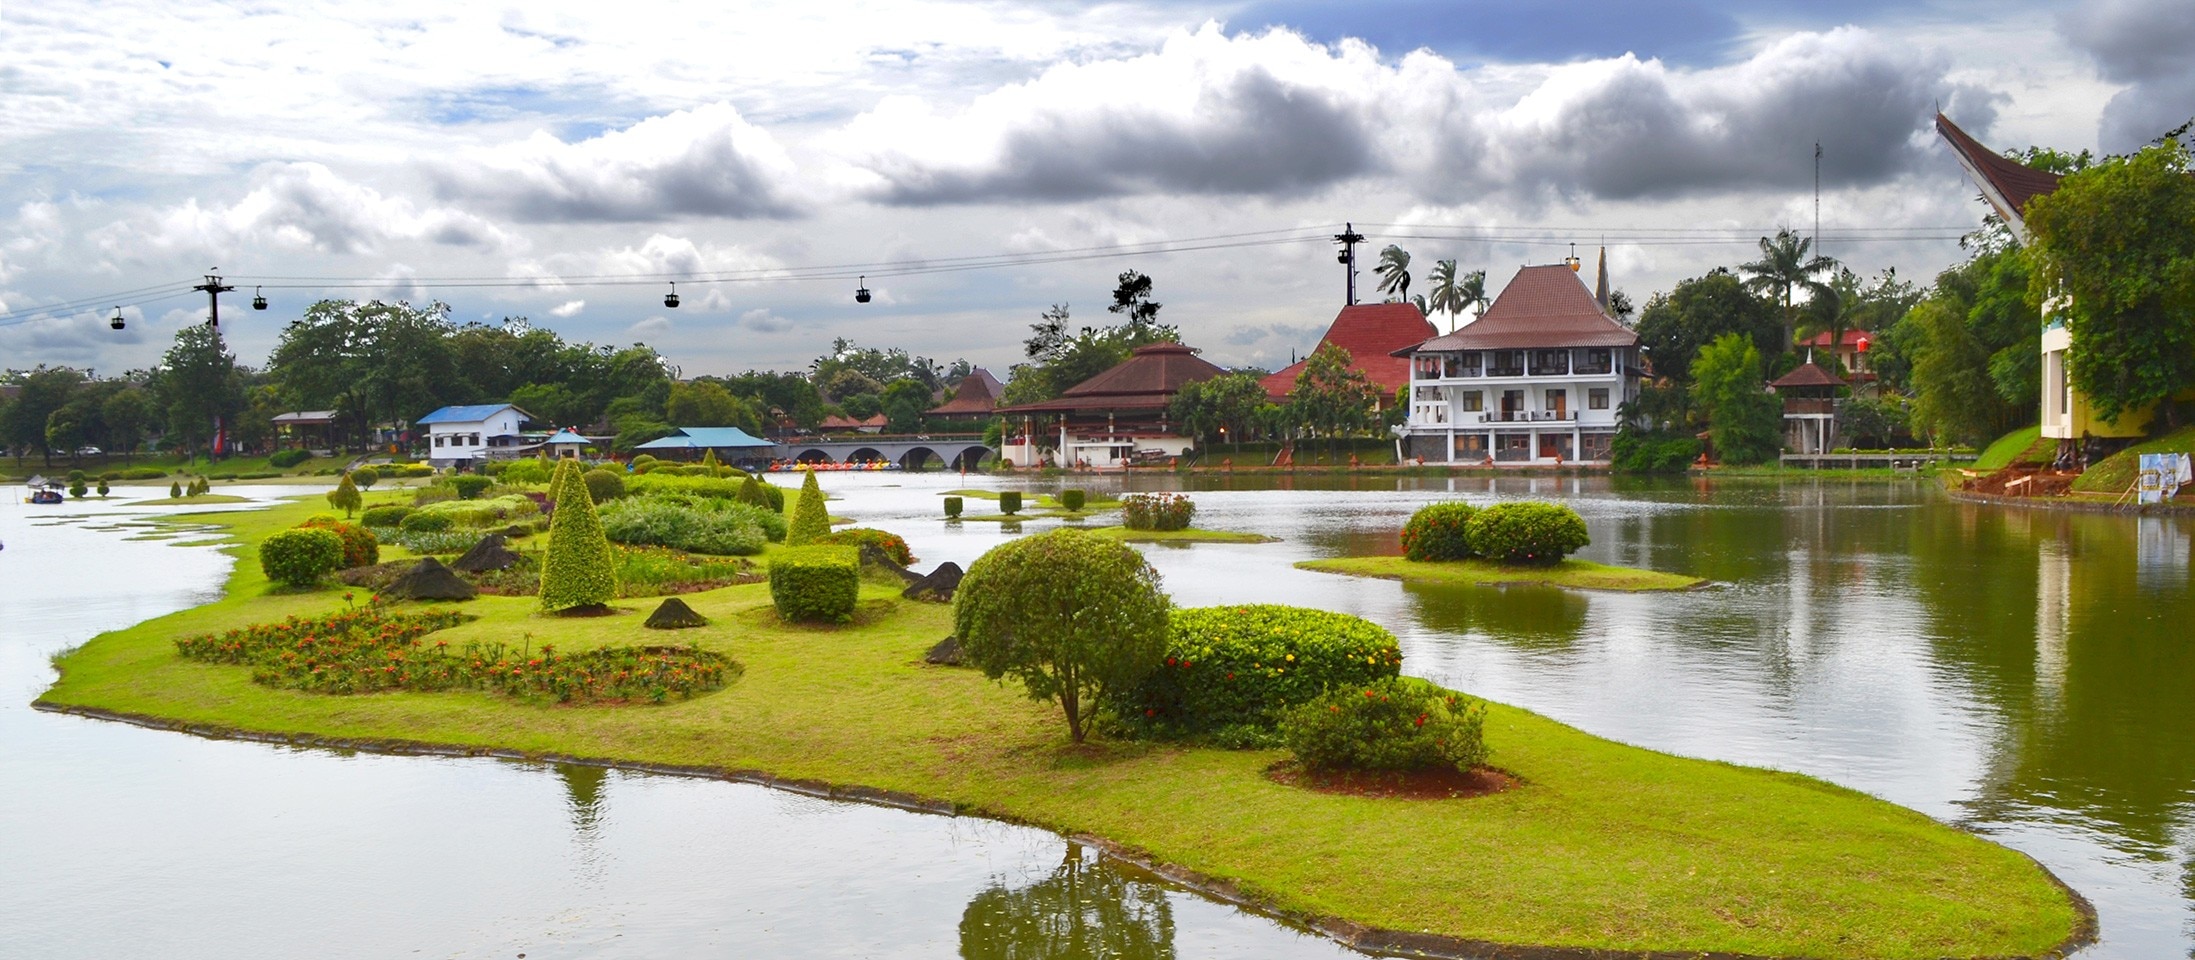 Taman Mini: Indonesia's Rich Cultural Showcase